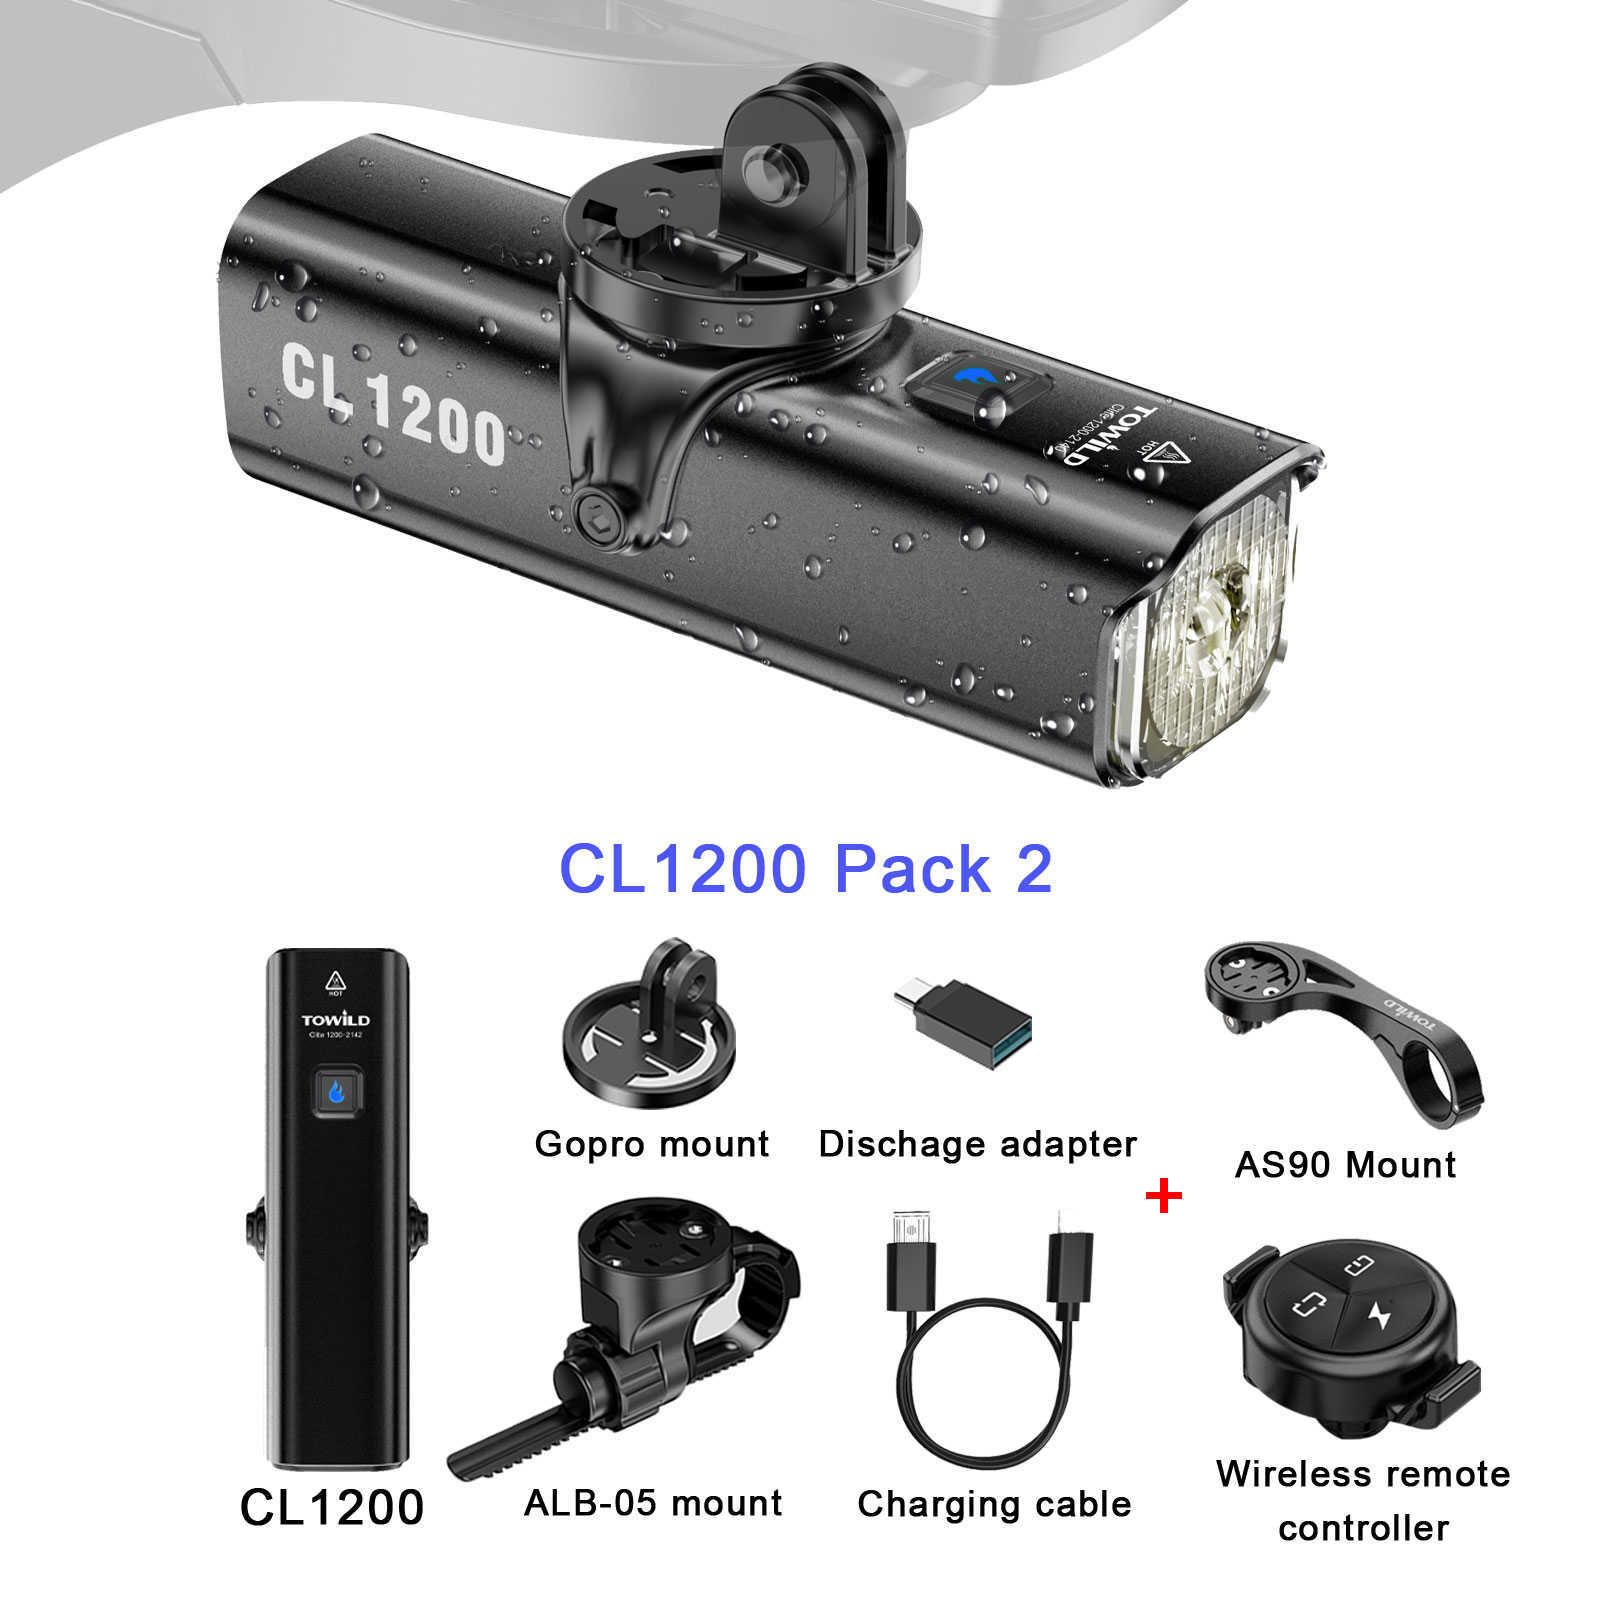 Cl1200 Pack 2